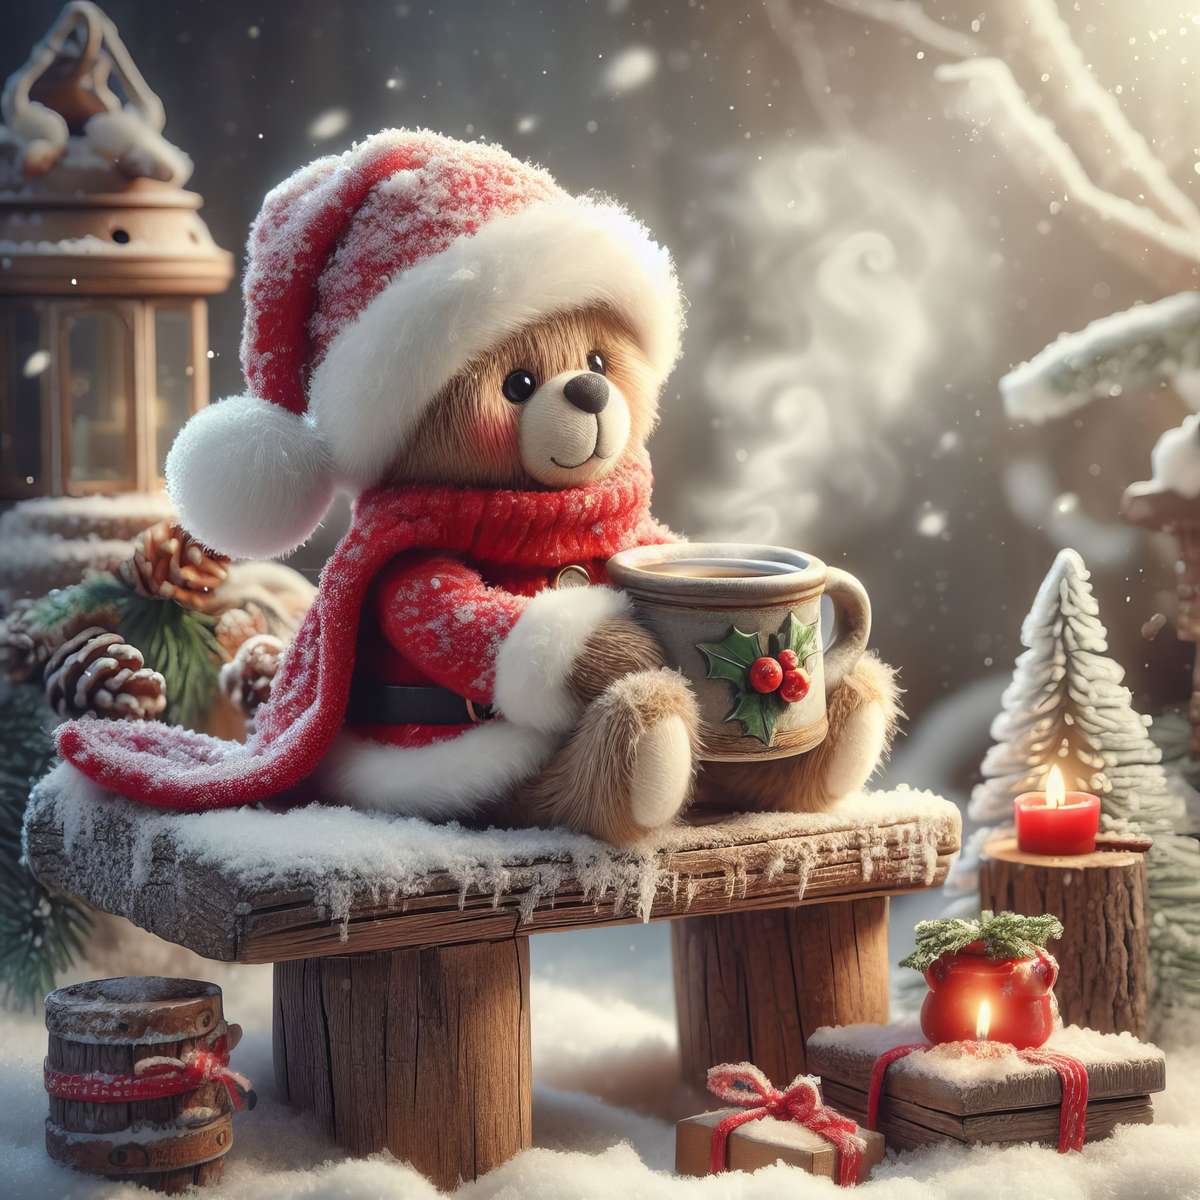 Cute teddy bear Santa Claus online puzzle